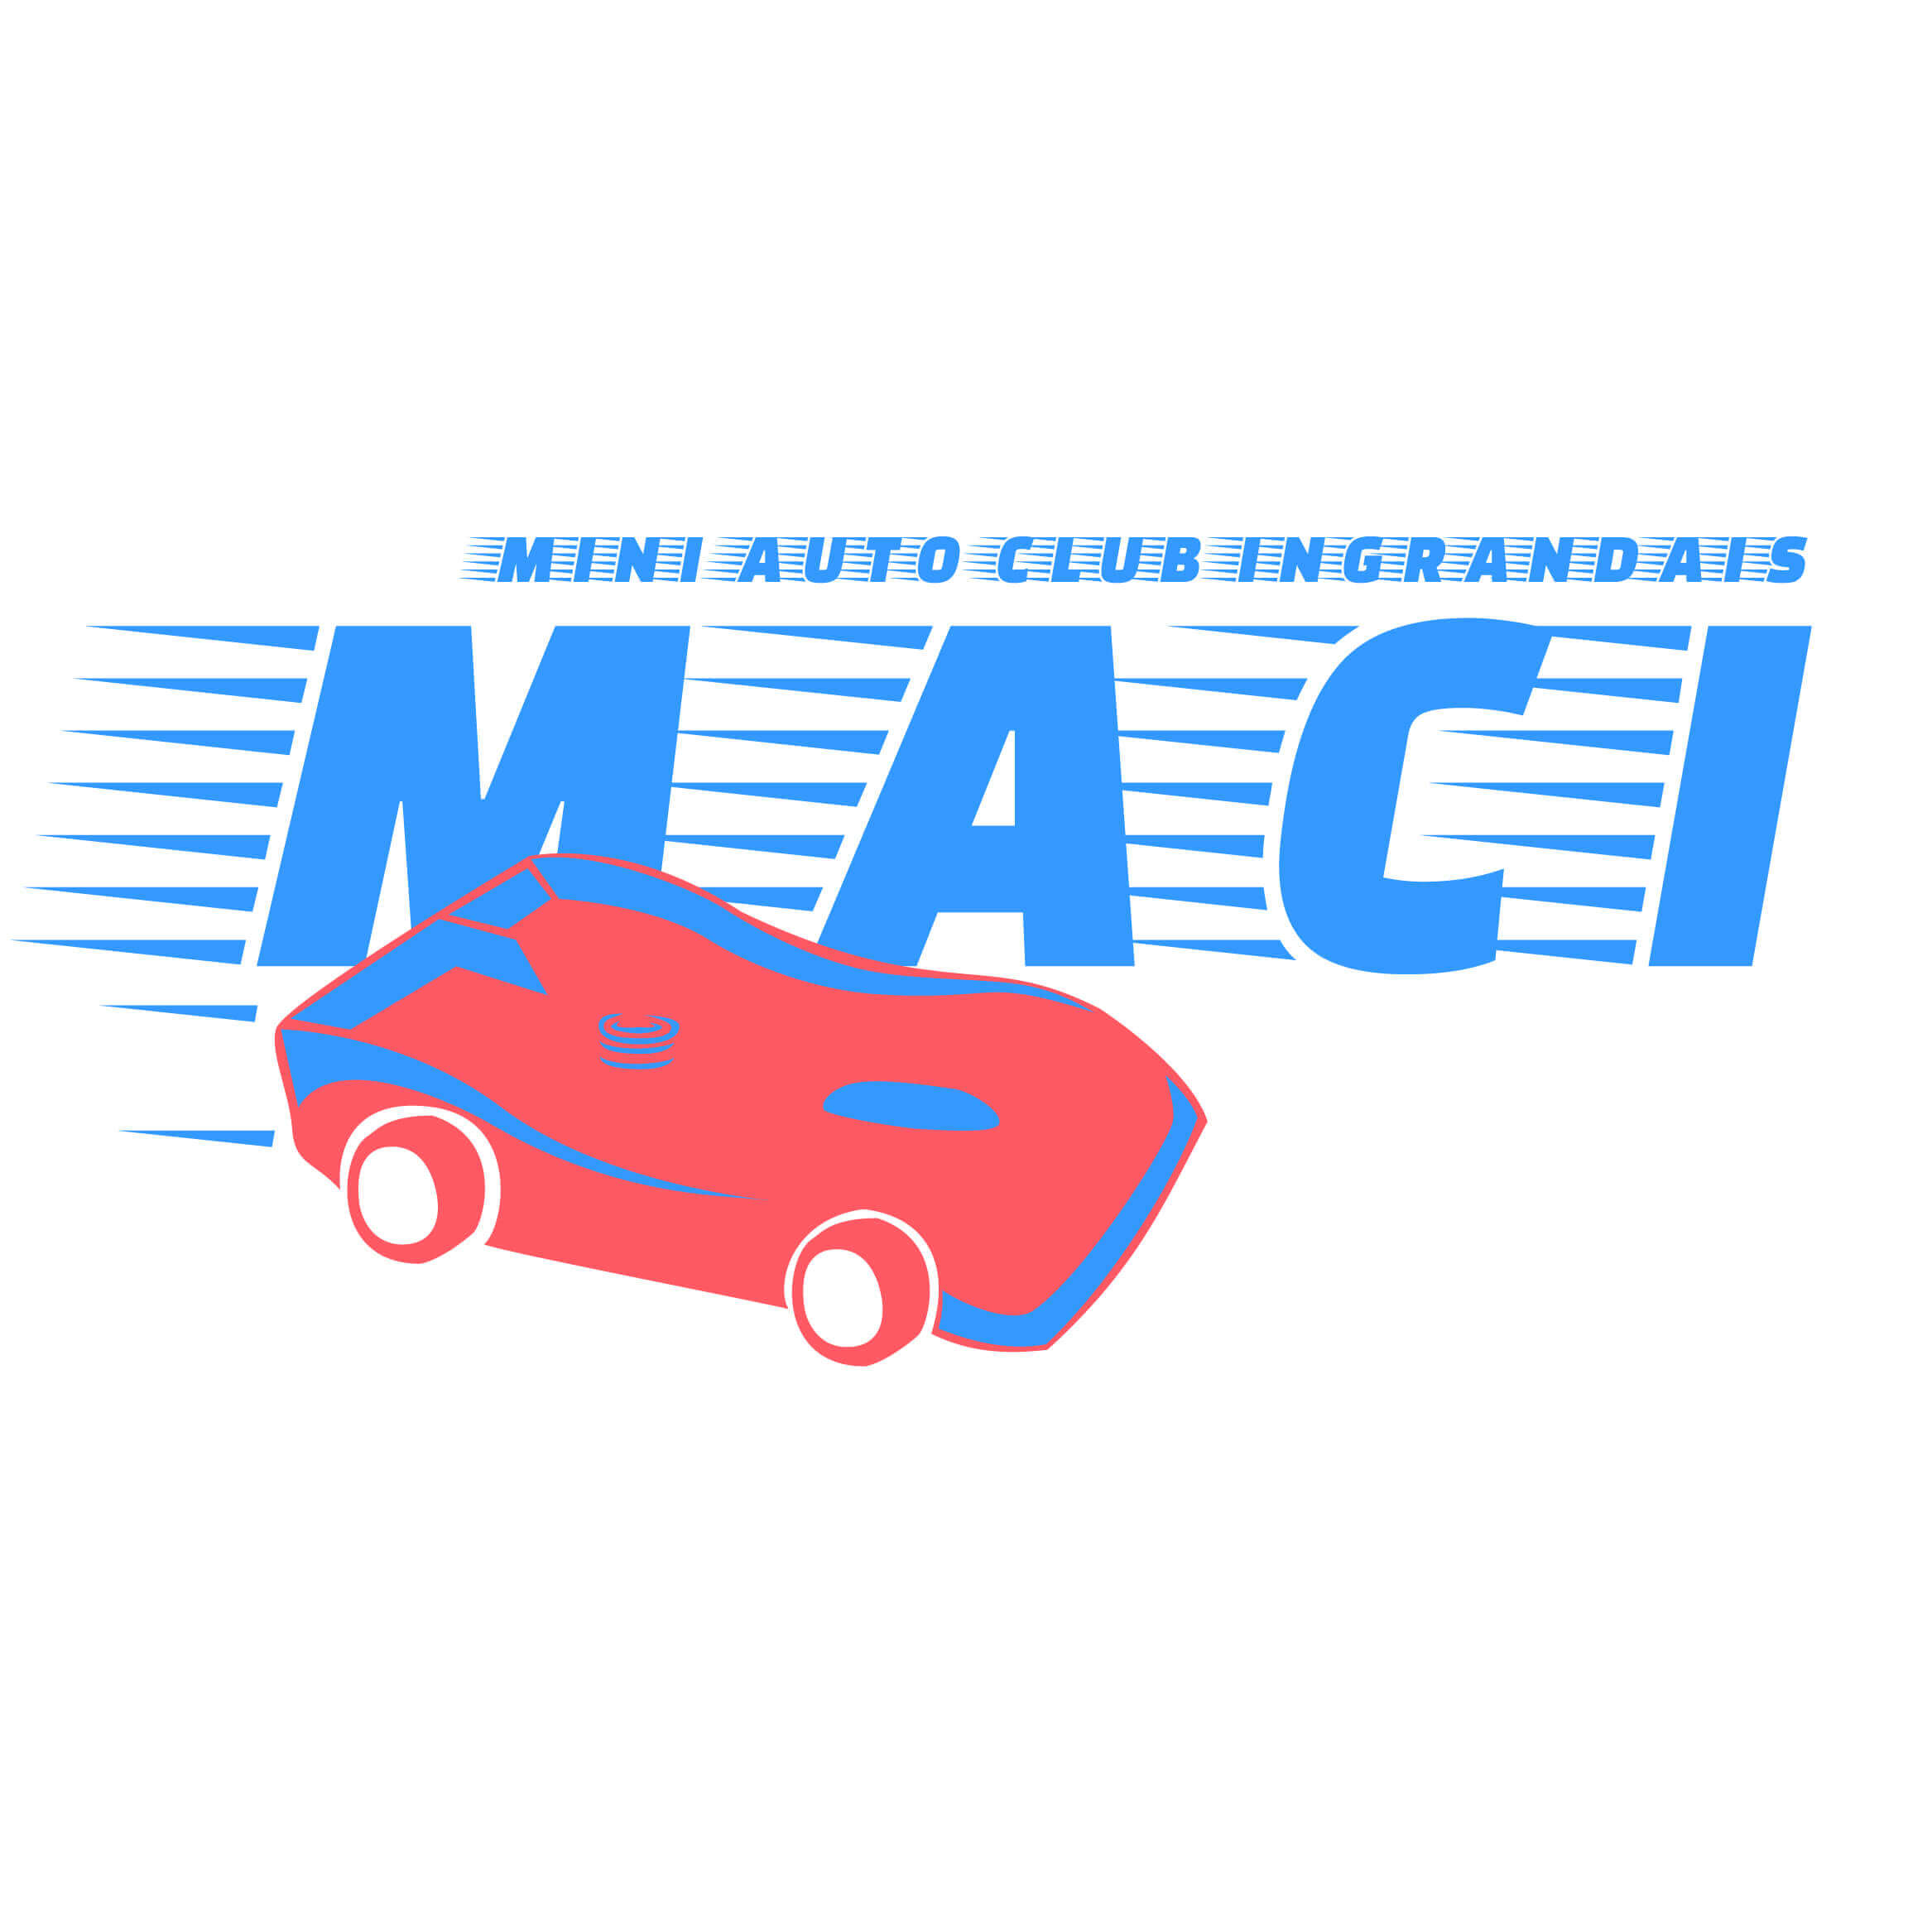 Proposition Logo MACI